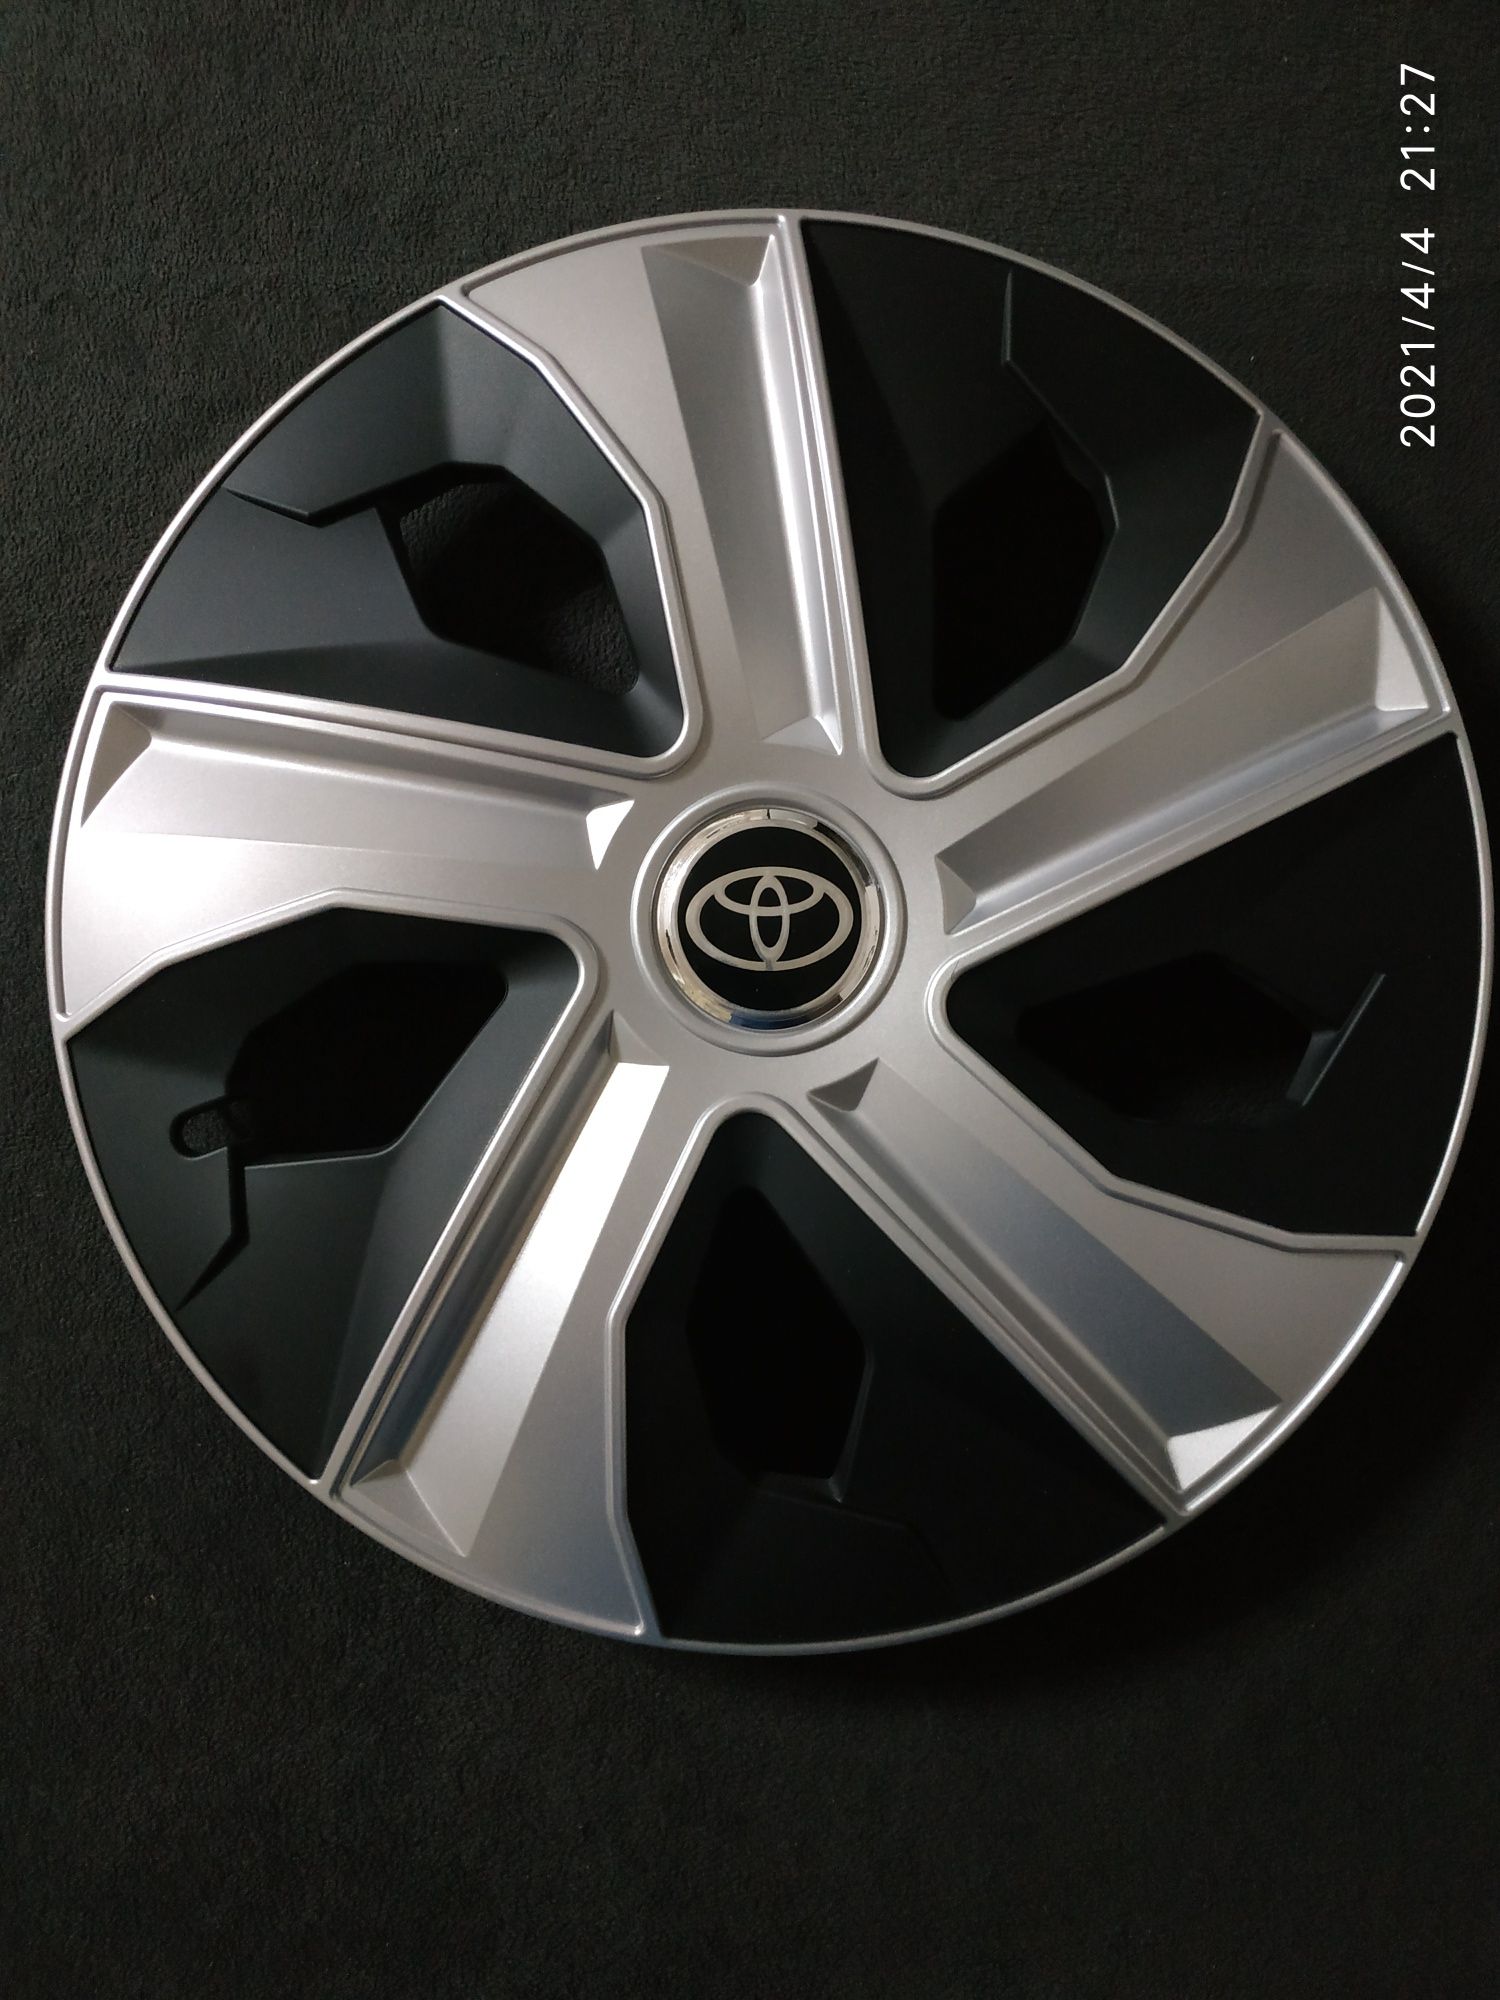 Ковпаки Колпаки Toйота Toyota r15 16 14  диски шини колеса ковпак київ